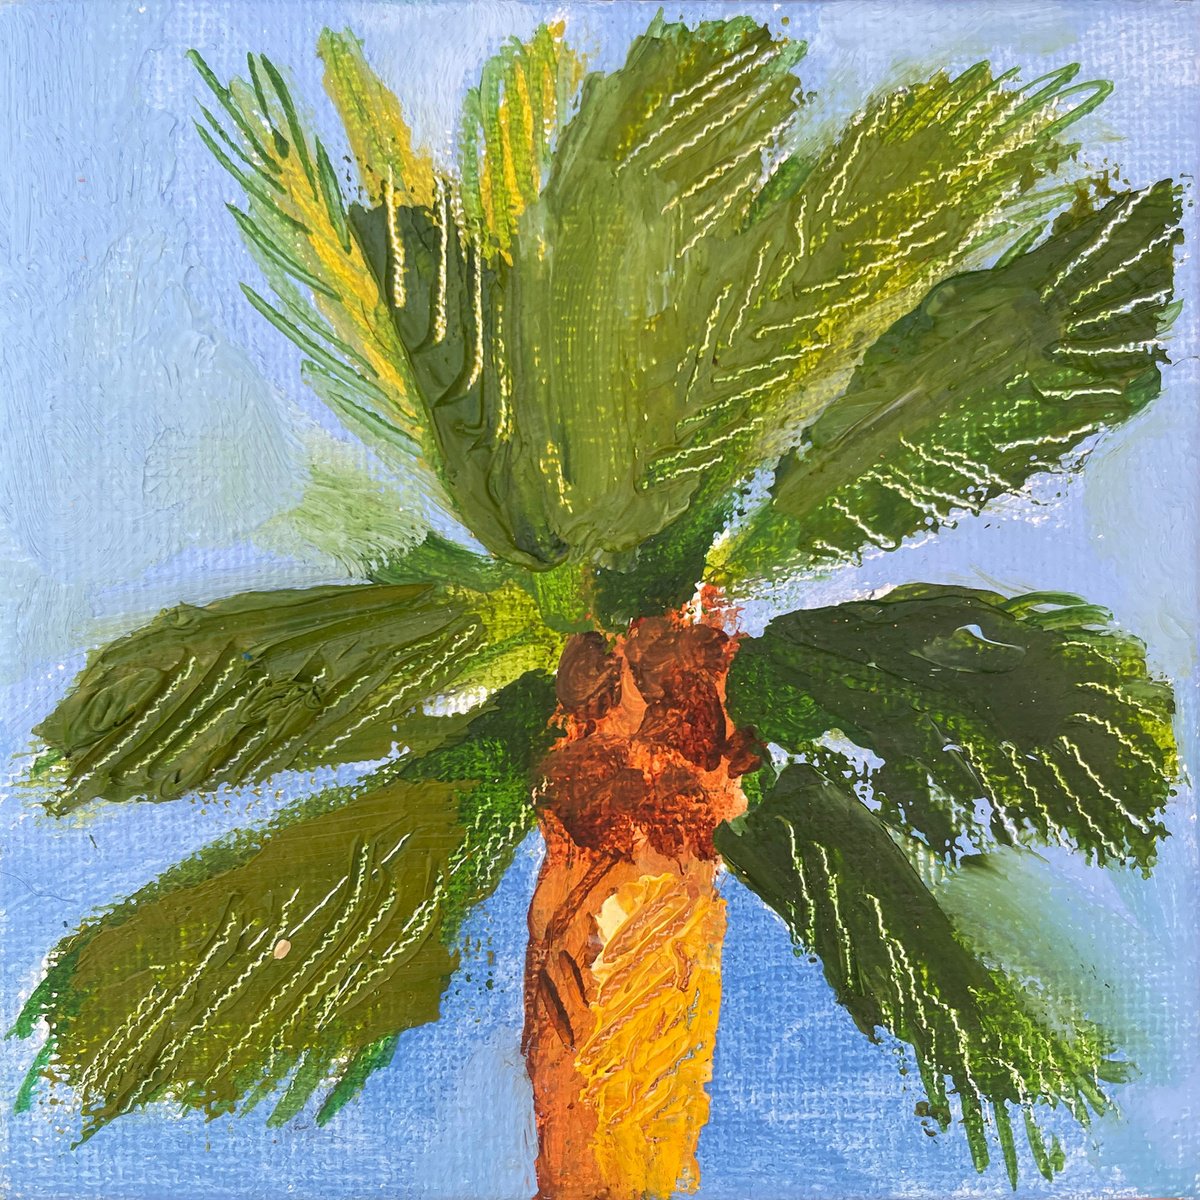 Palm Tree - 10x10 cm by Victoria Dael